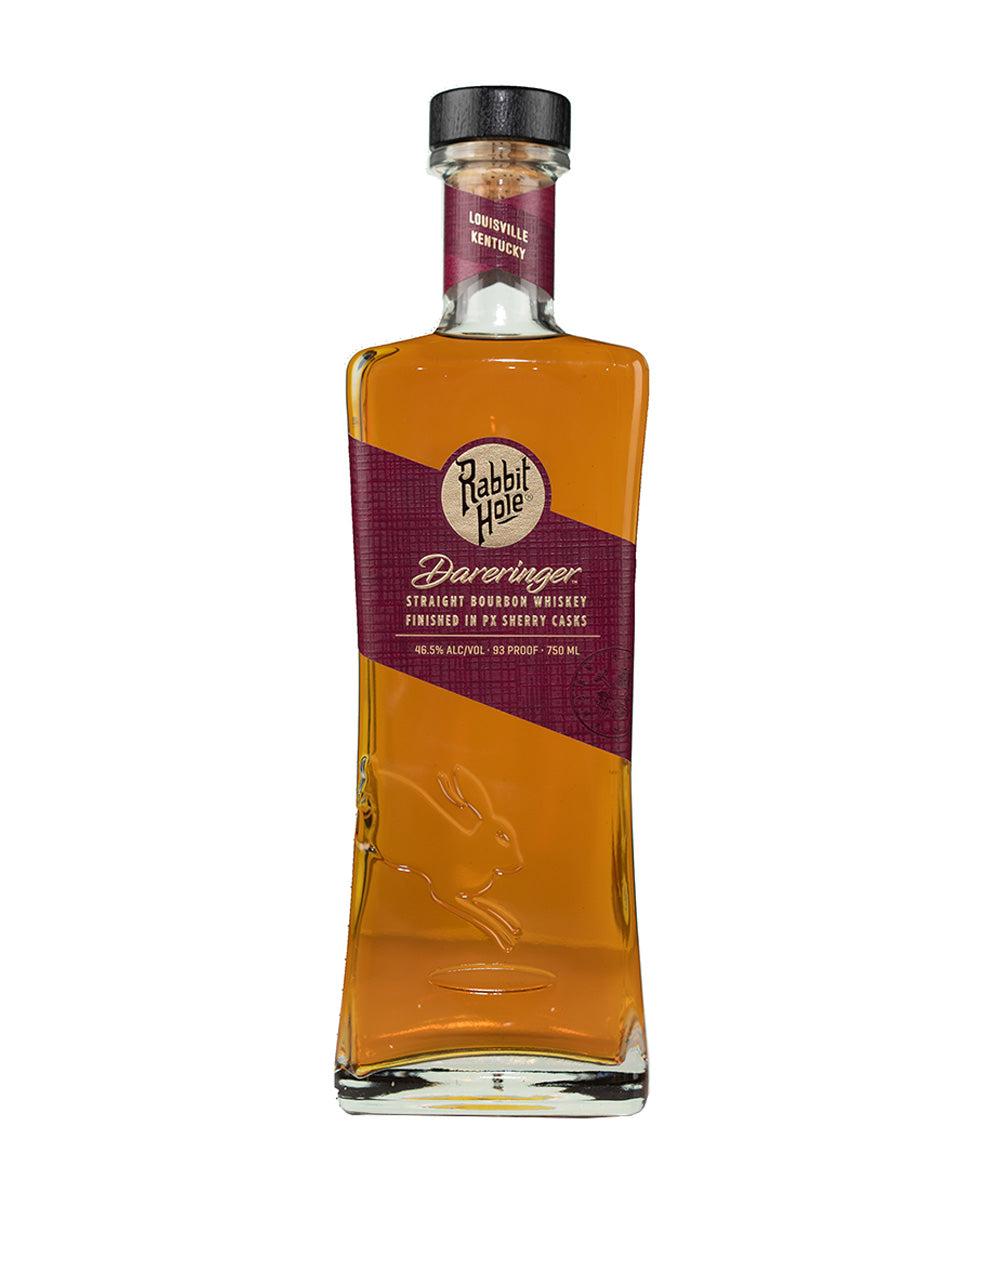 Rabbit Hole Dareringer: Straight Bourbon Whiskey Finished in PX Sherry Casks